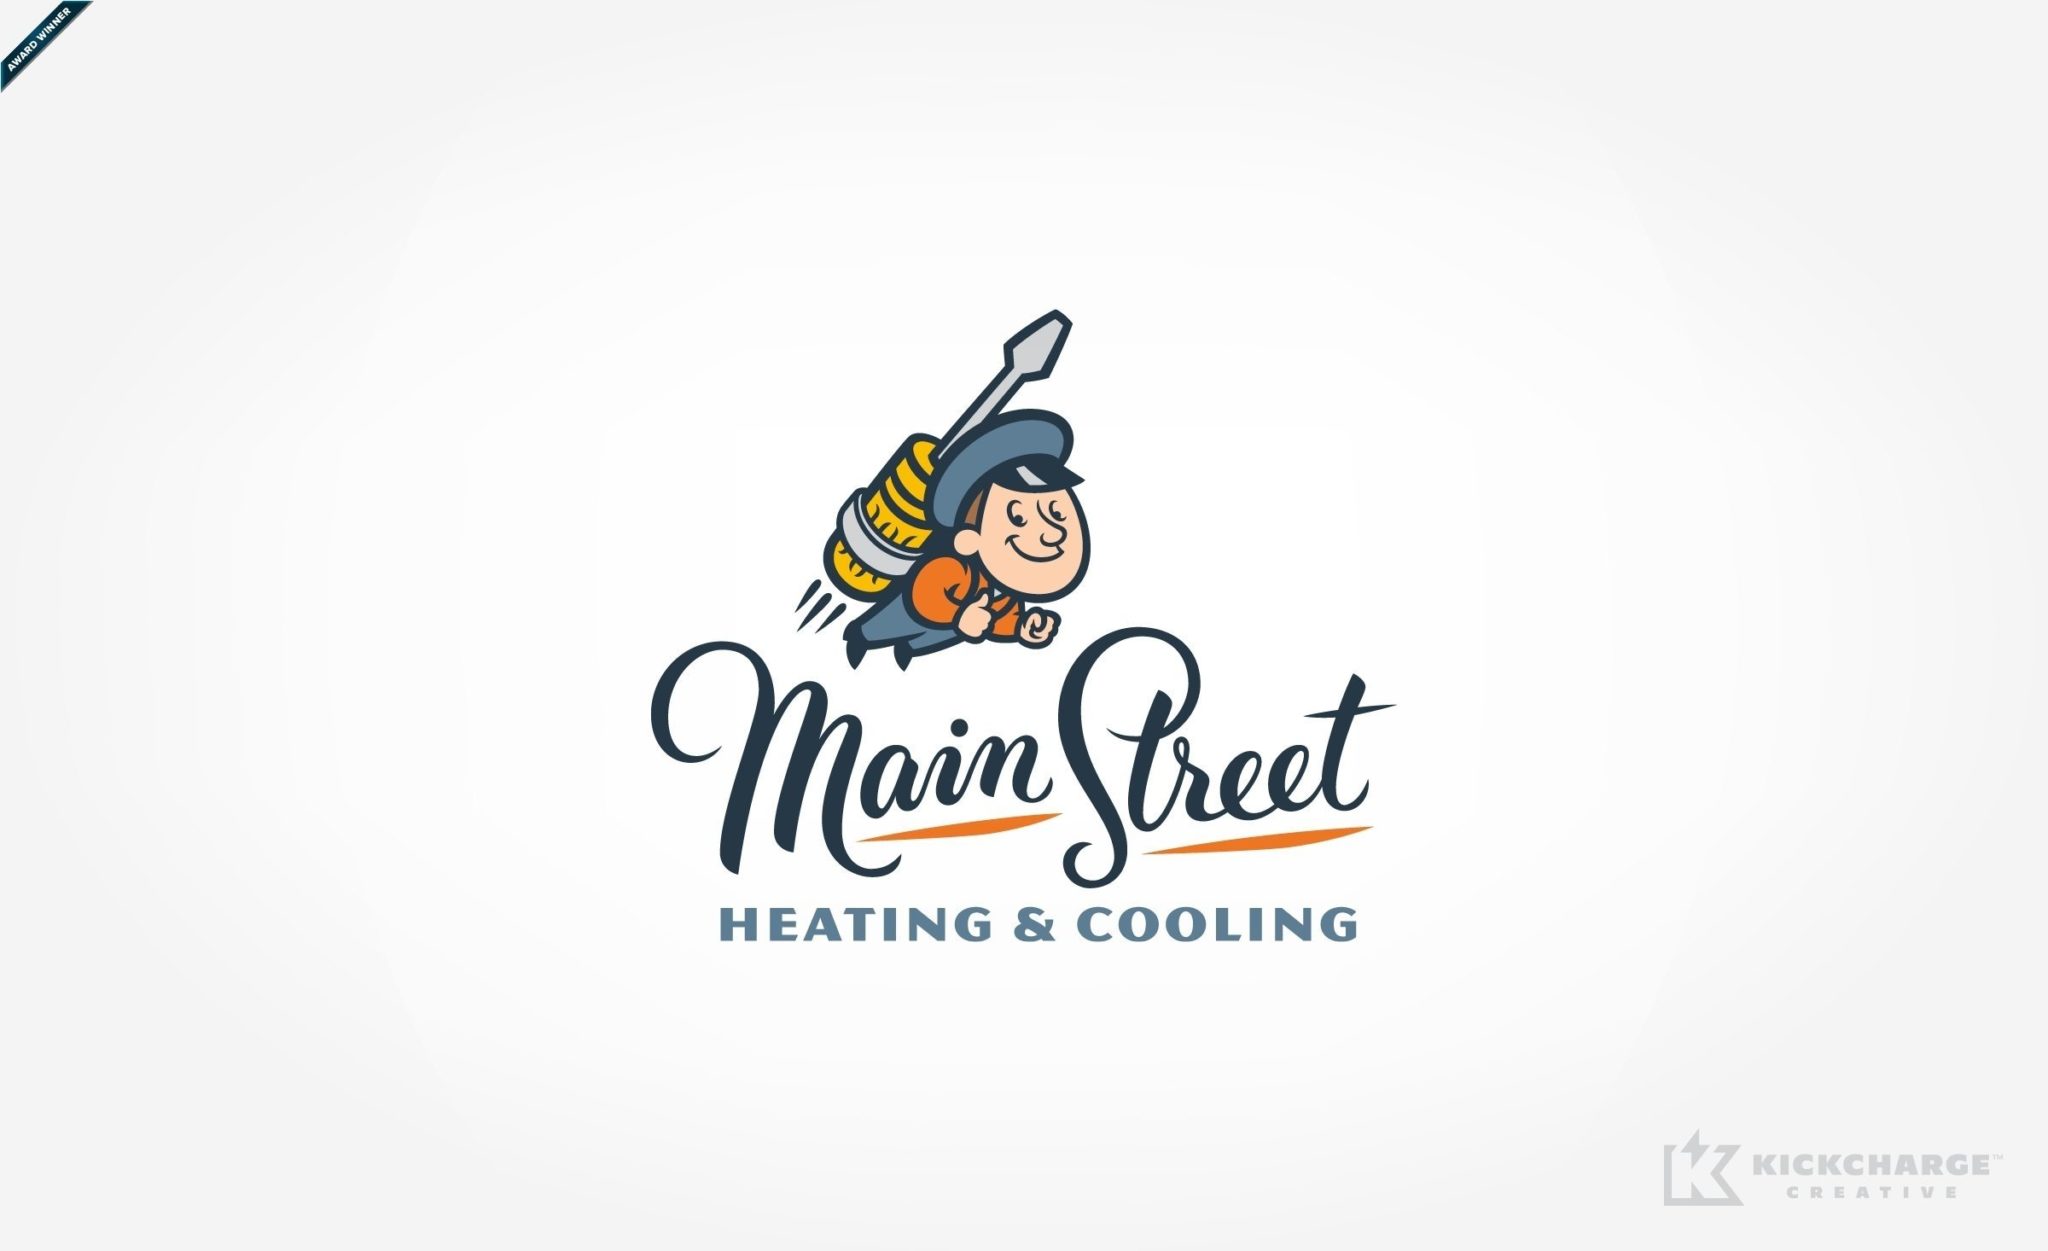 Main Street Heating & Cooling